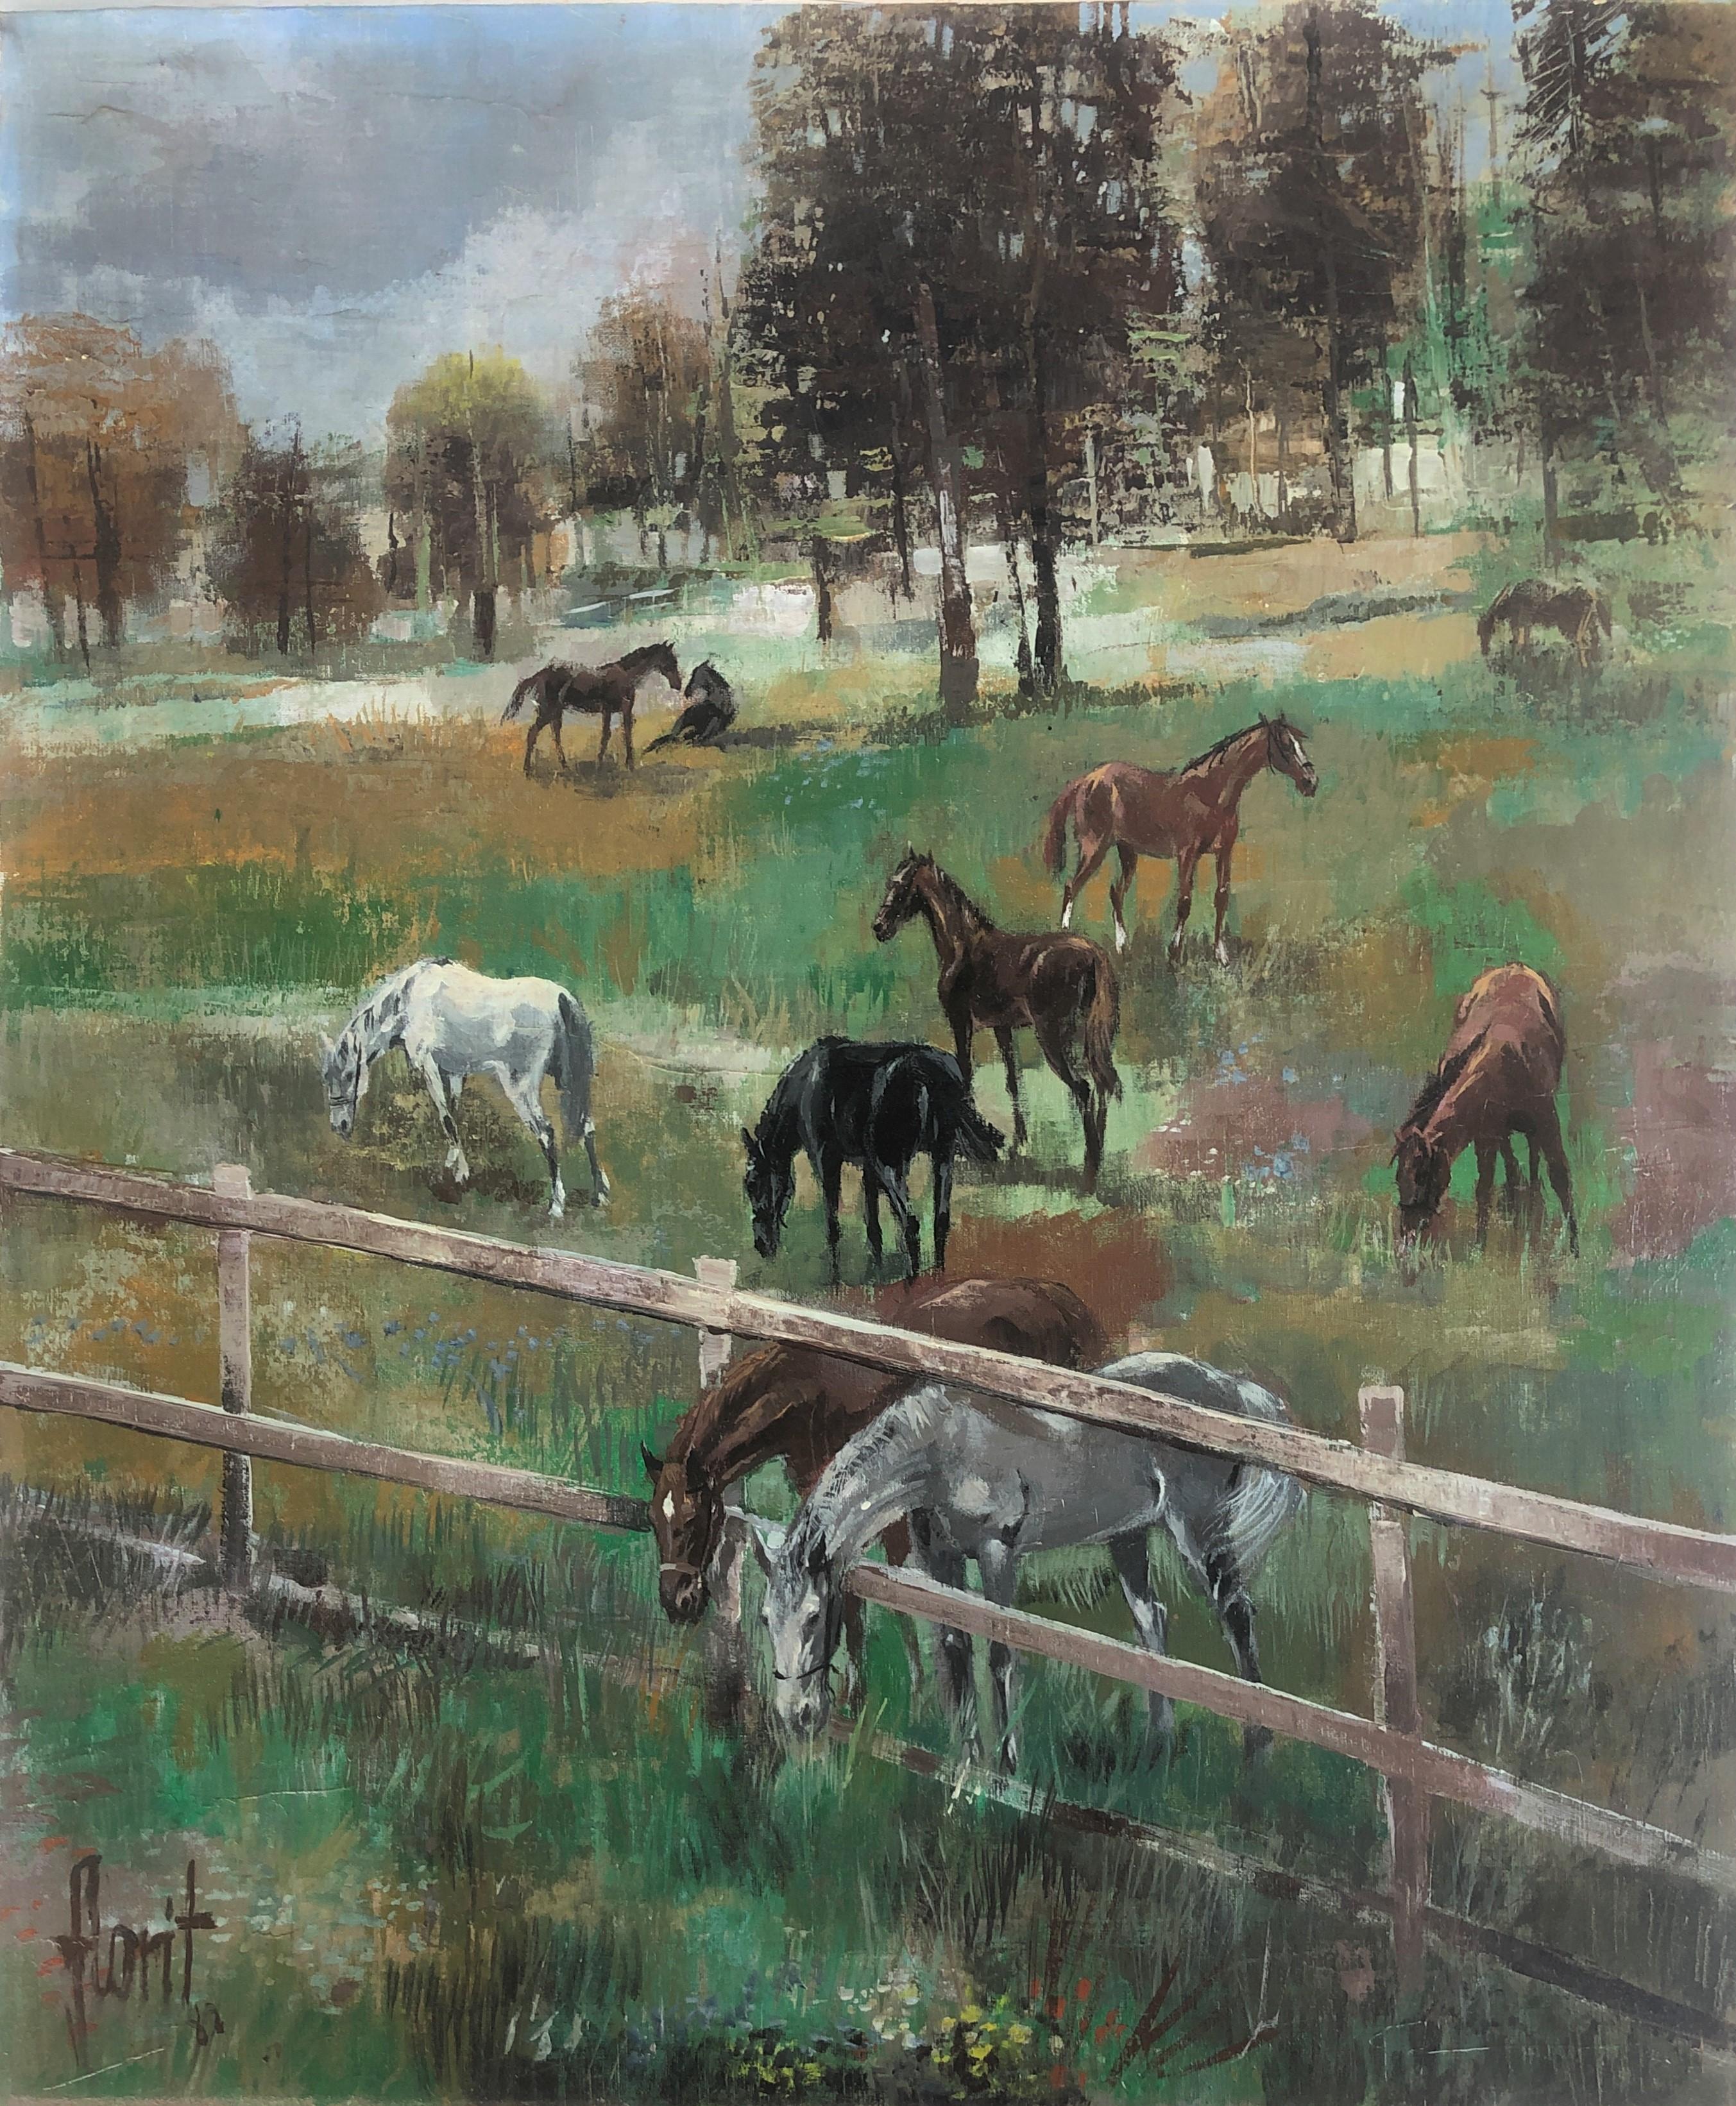 Jose Luis Florit Rodero Landscape Painting - horses in the field landscape oil on canvas painting